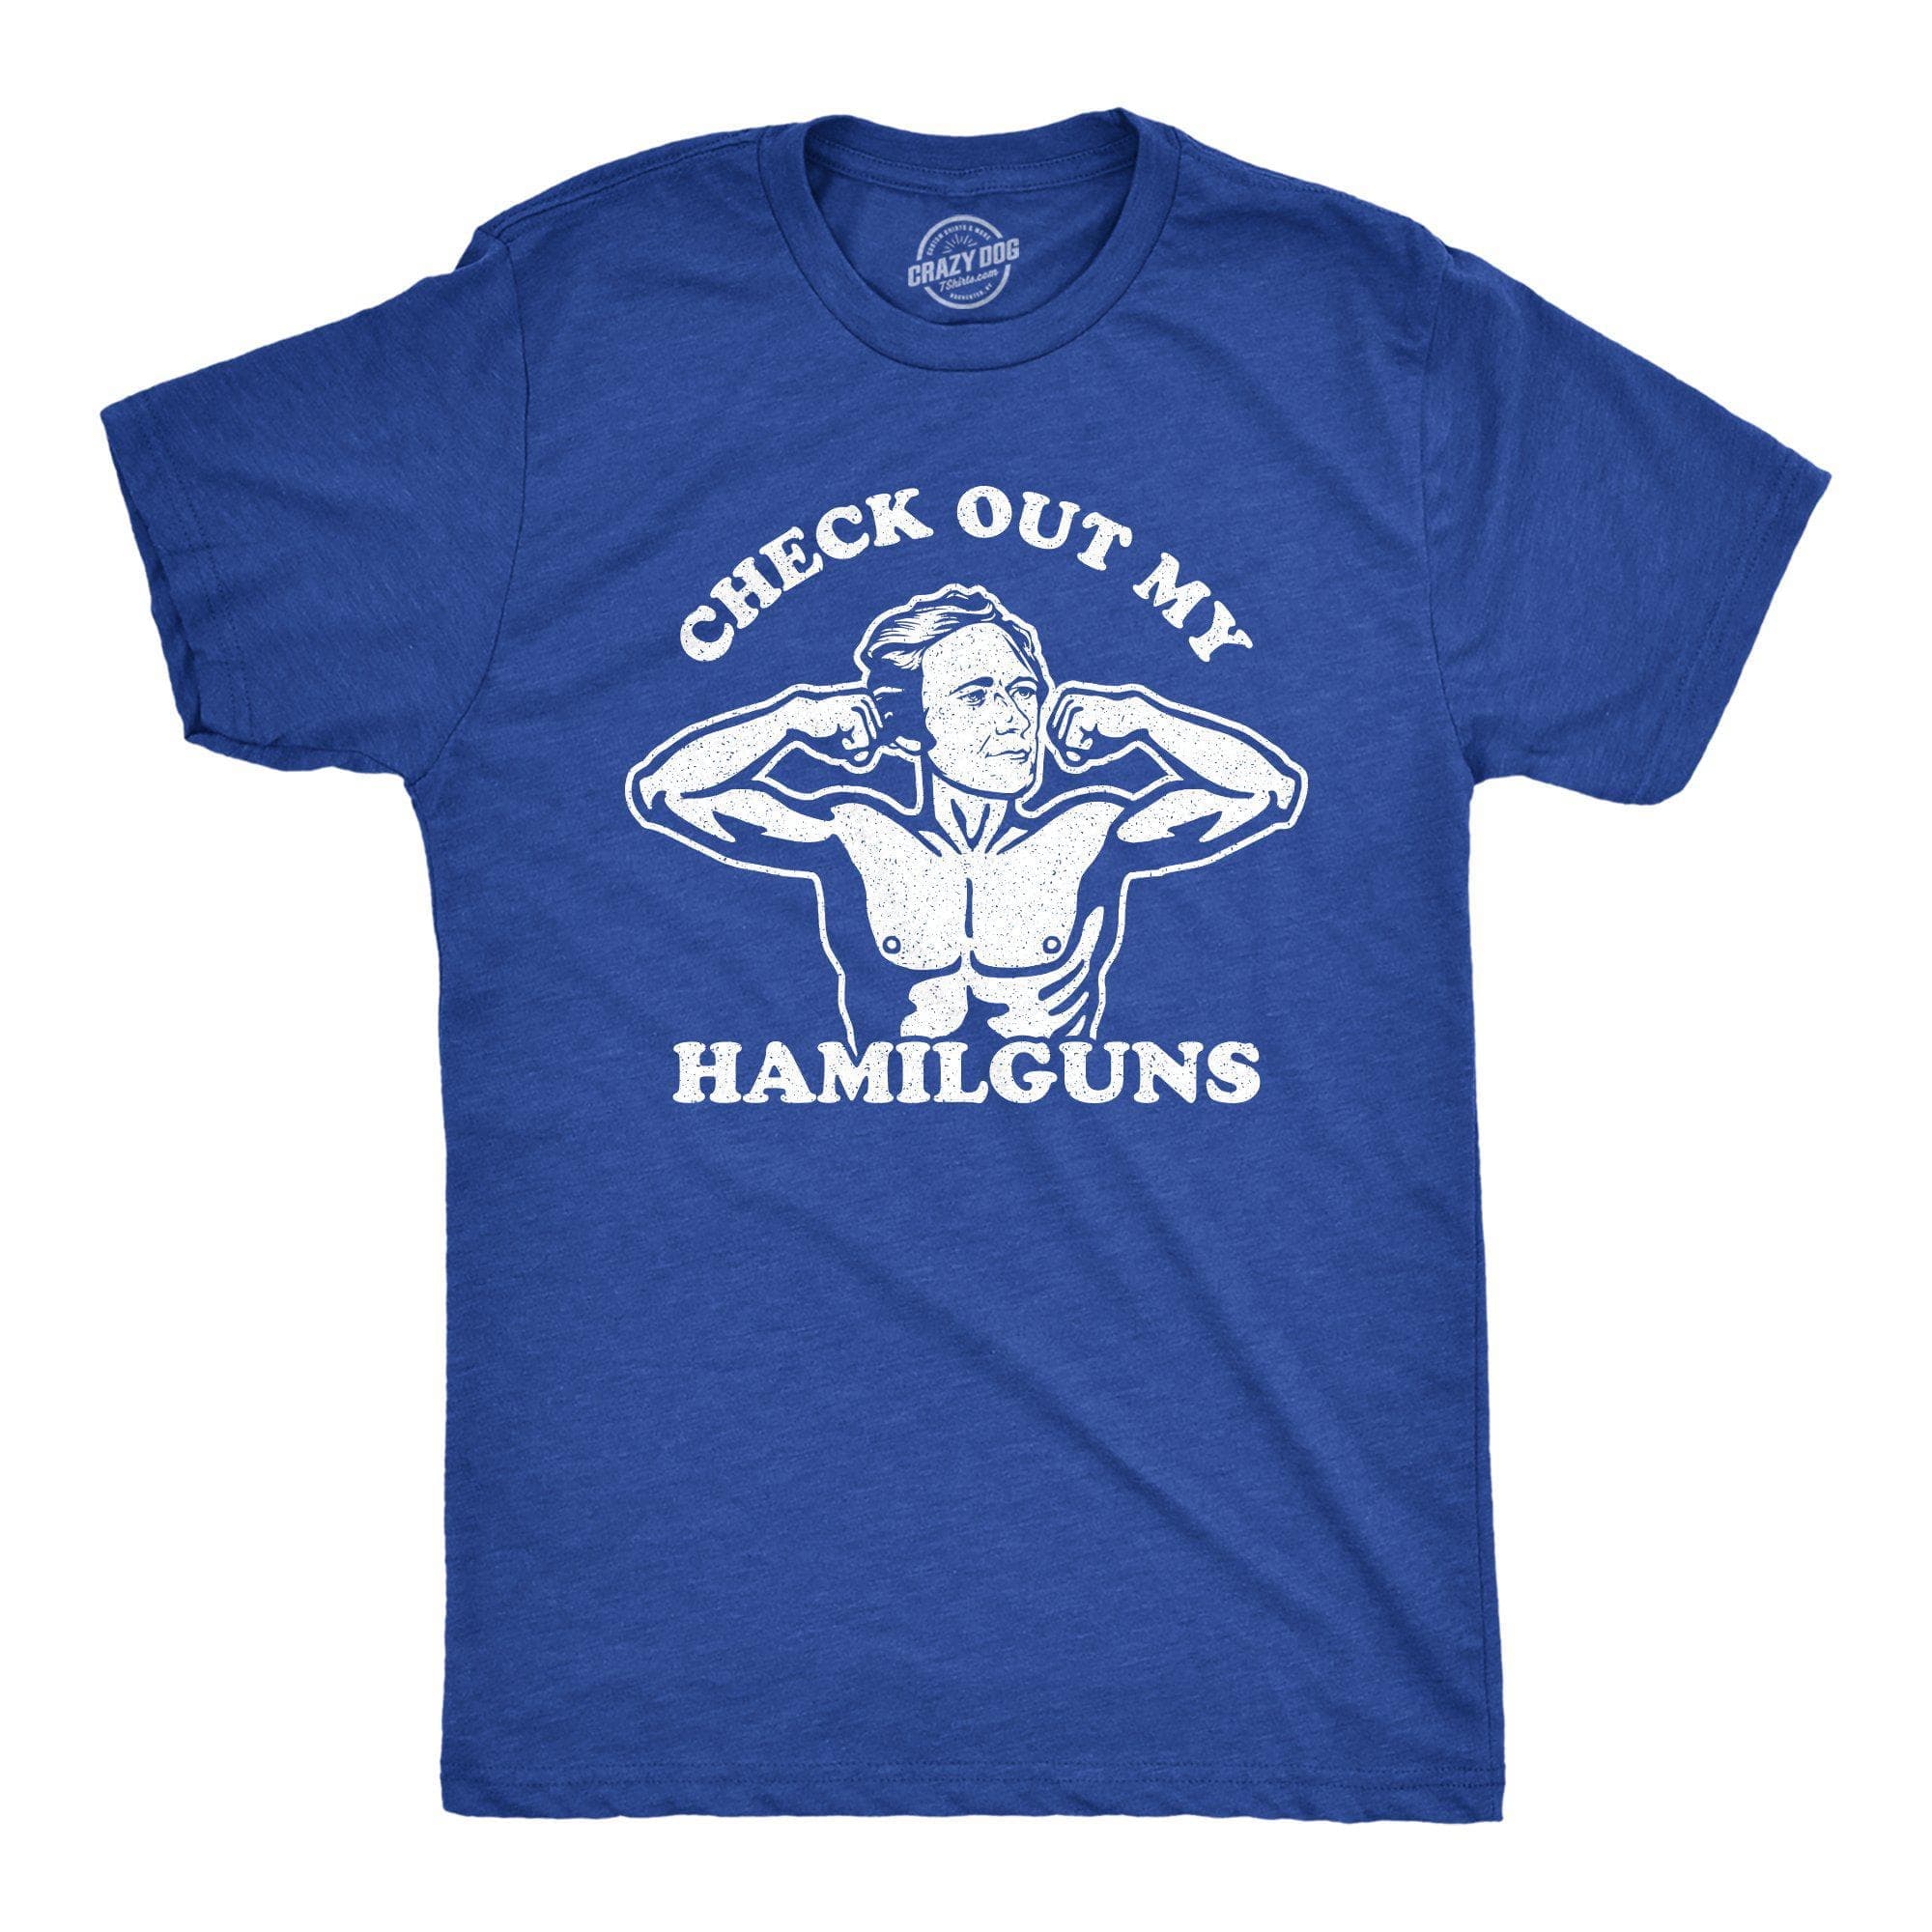 Check Out My Hamilguns Men's Tshirt - Crazy Dog T-Shirts